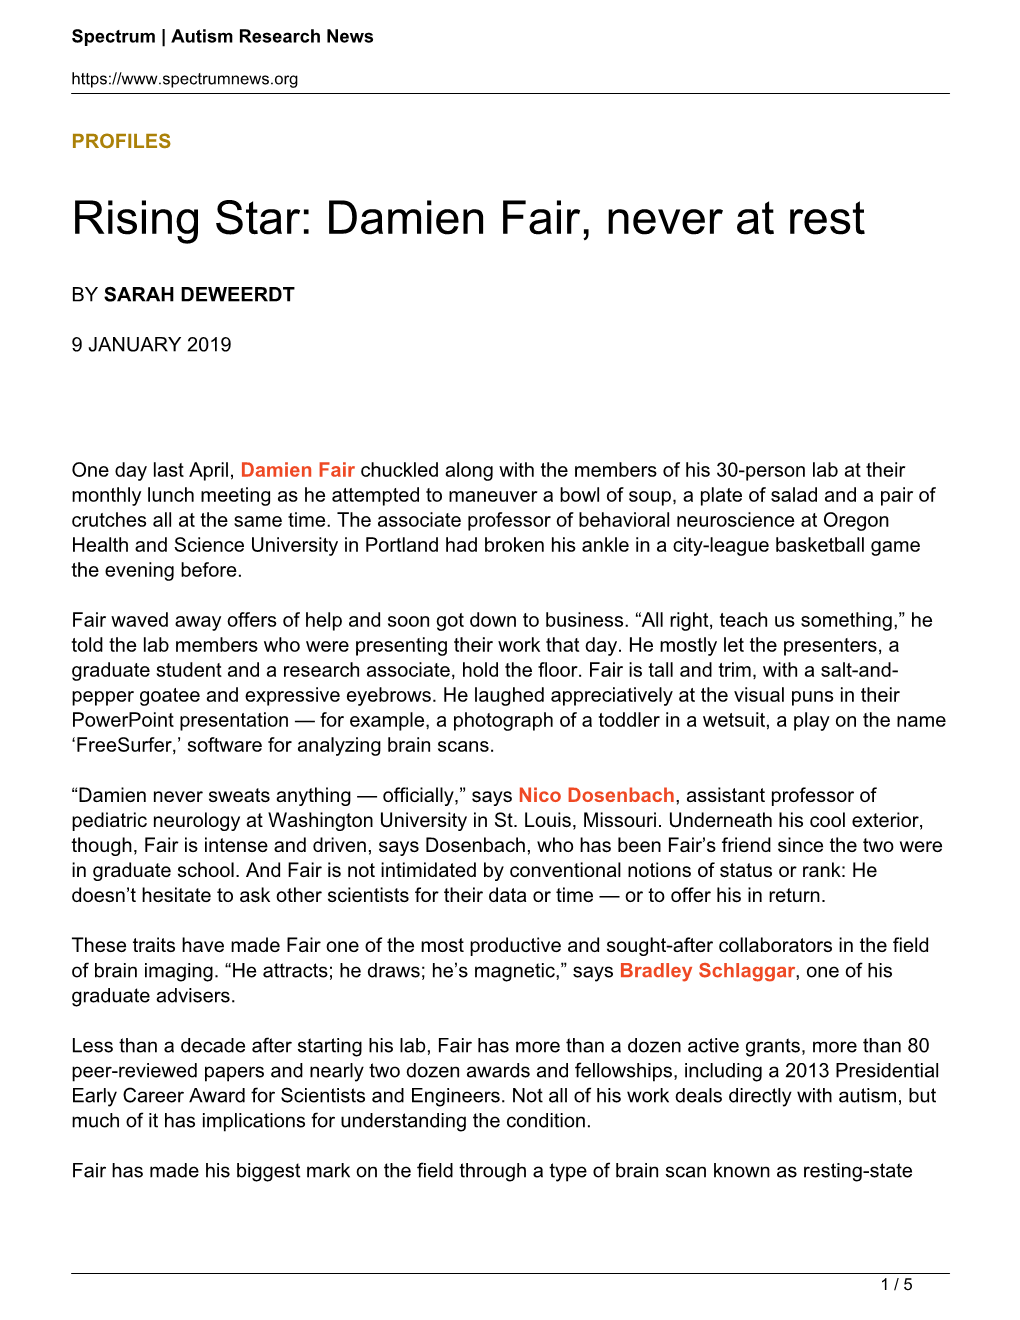 Damien Fair, Never at Rest